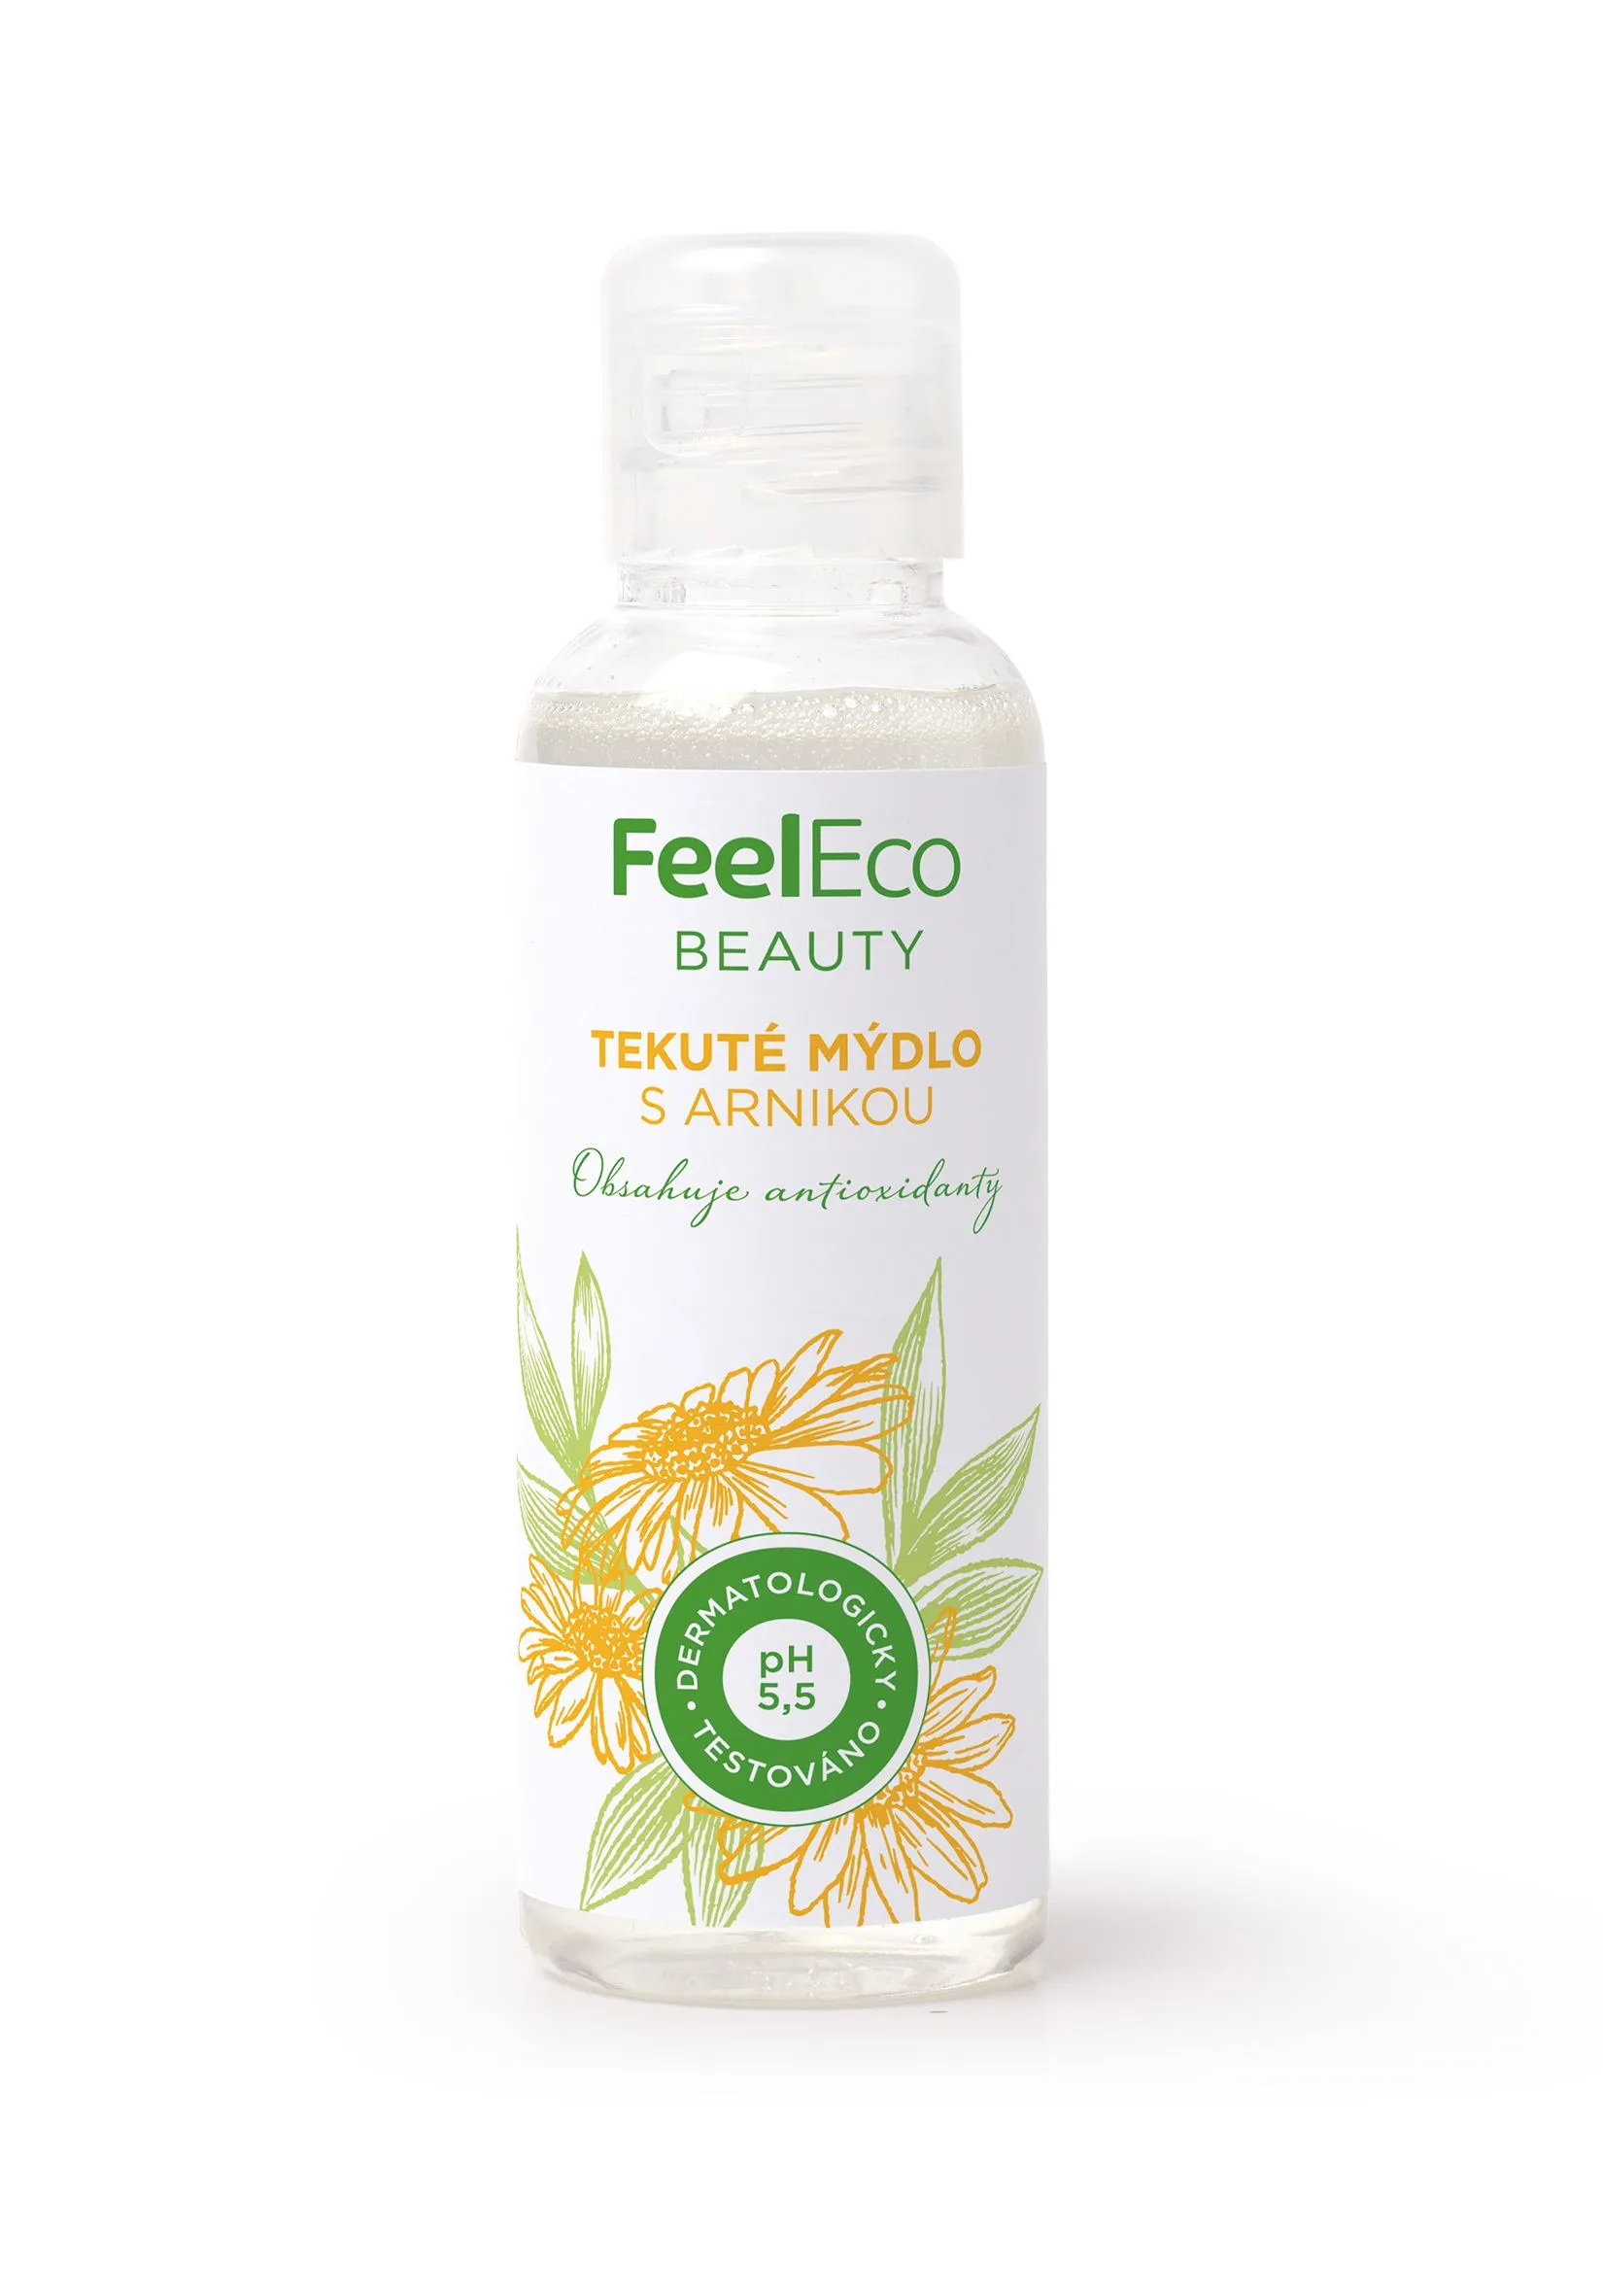 Feel Eco Tekuté mýdlo s arnikou 100 ml